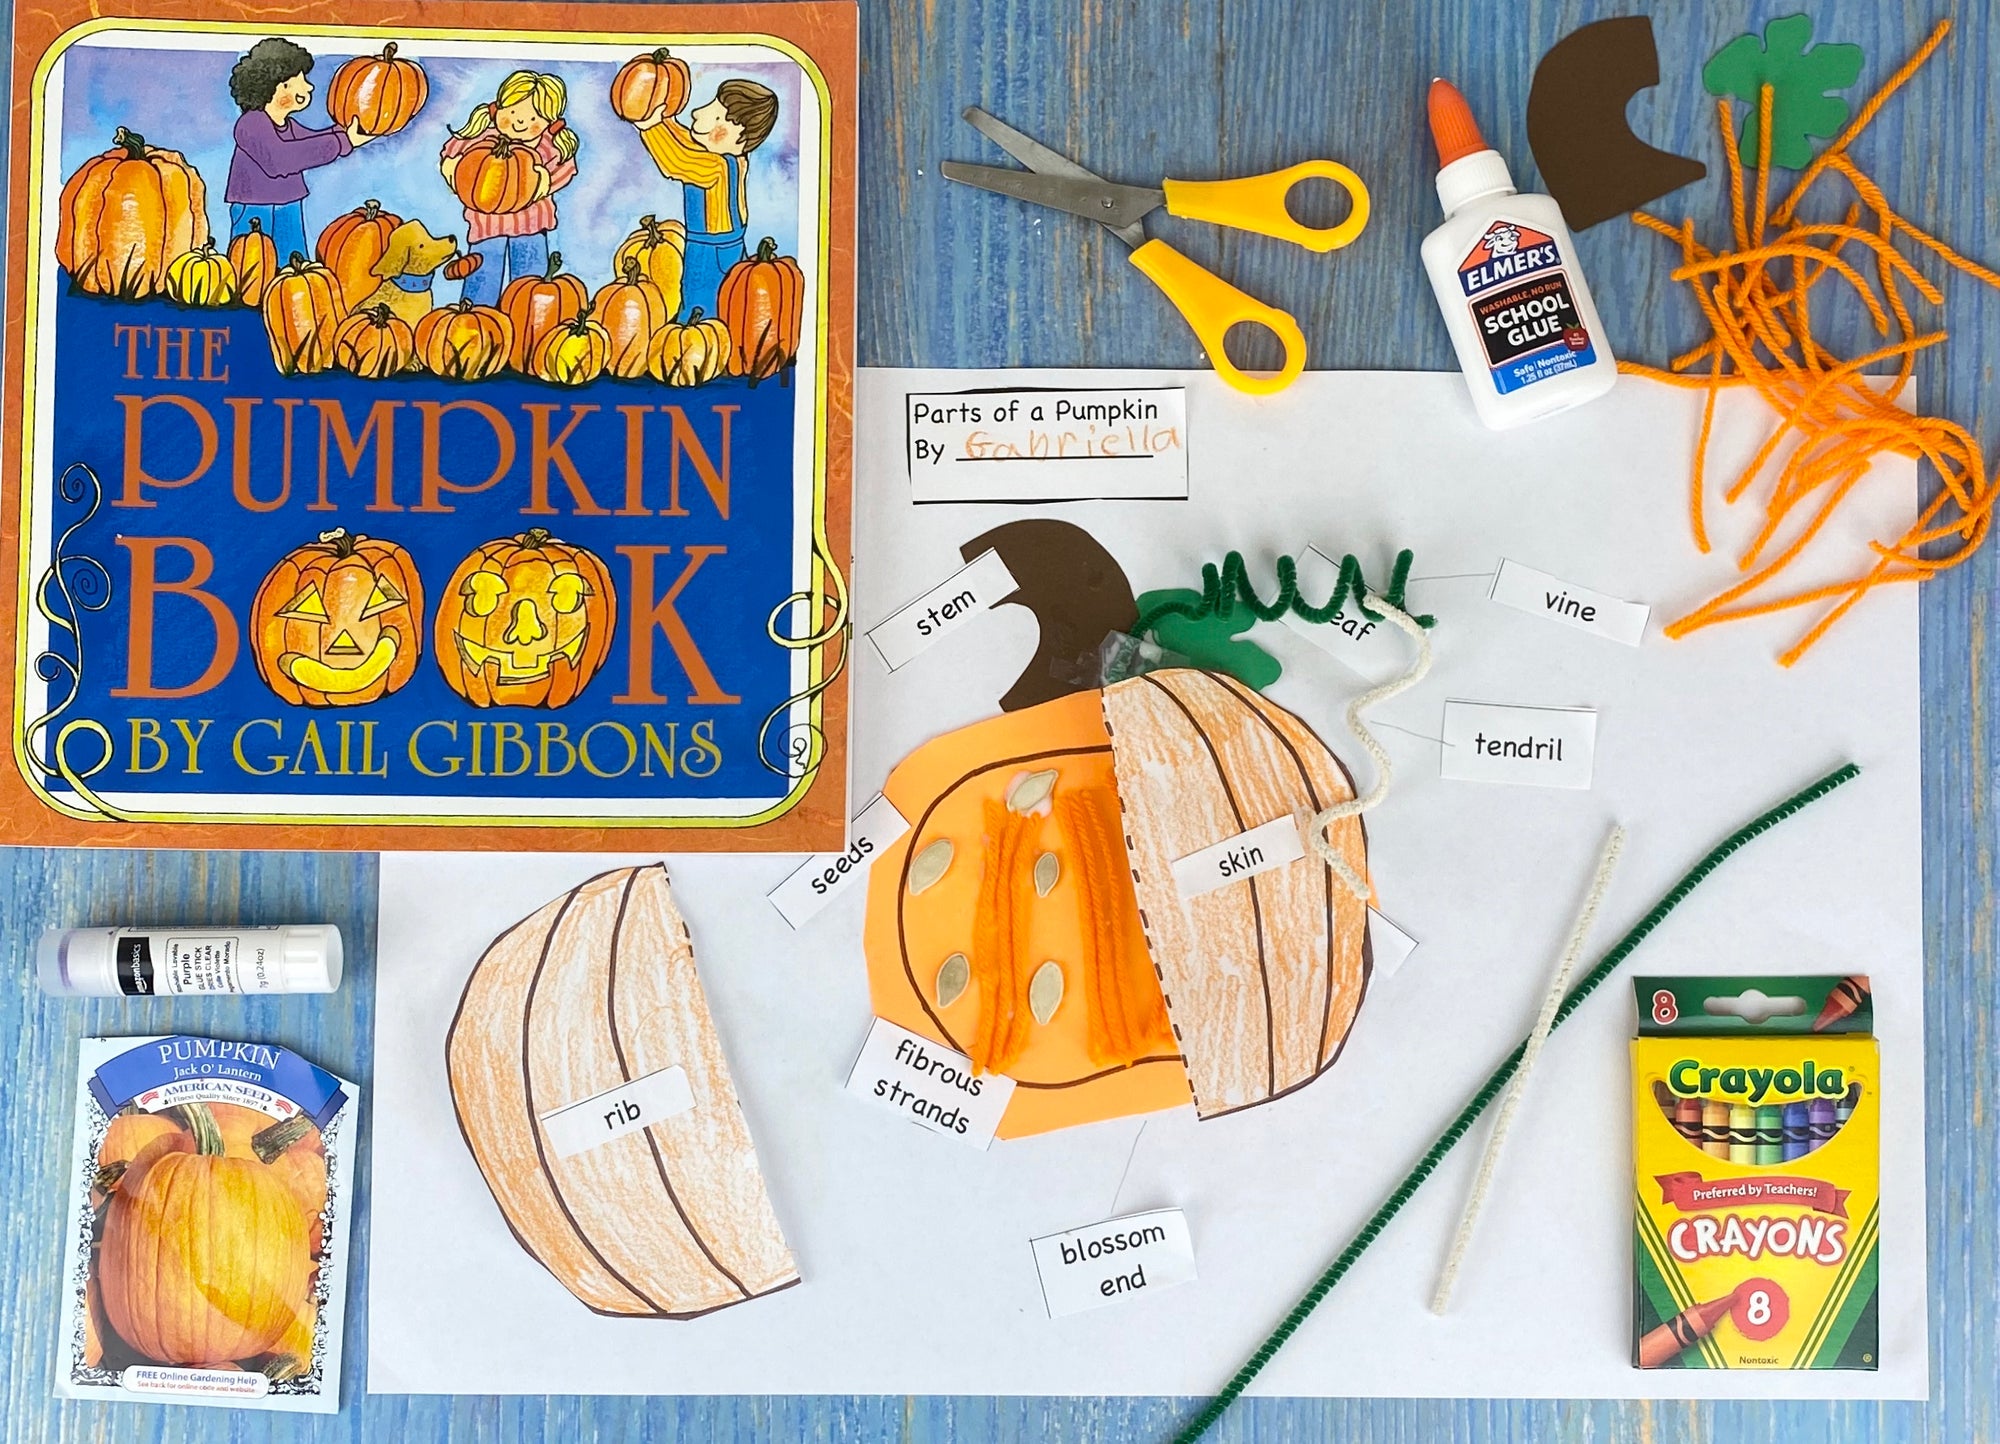 Parts of a Pumpkin Craft Kit